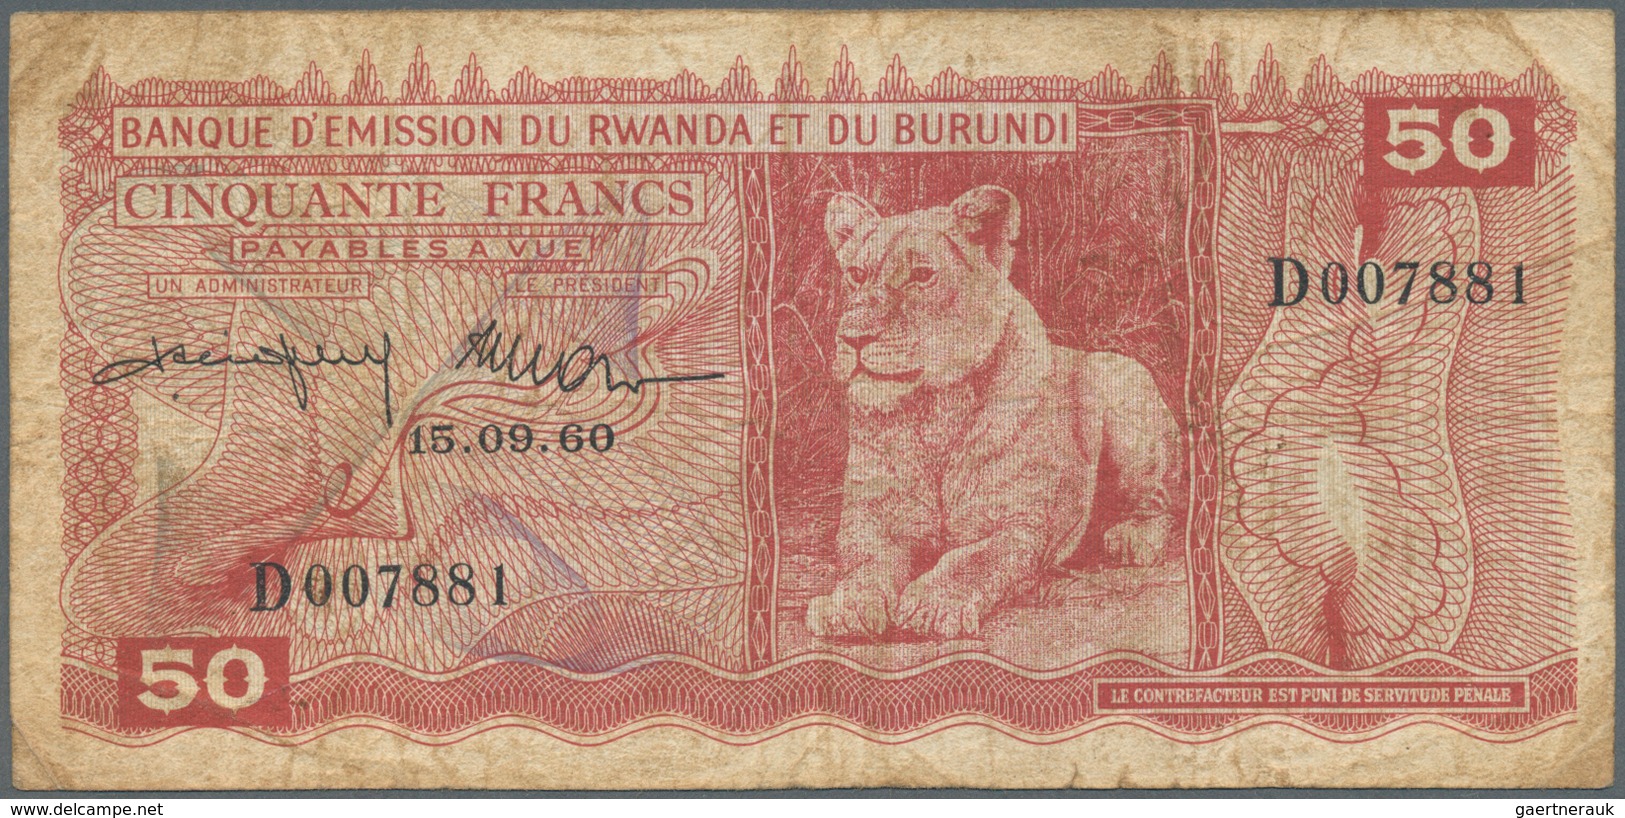 02944 Africa / Afrika: Collectors book with 210 Banknotes from Namibia, Nigeria, Rwanda-Burundi, Rwanda, R